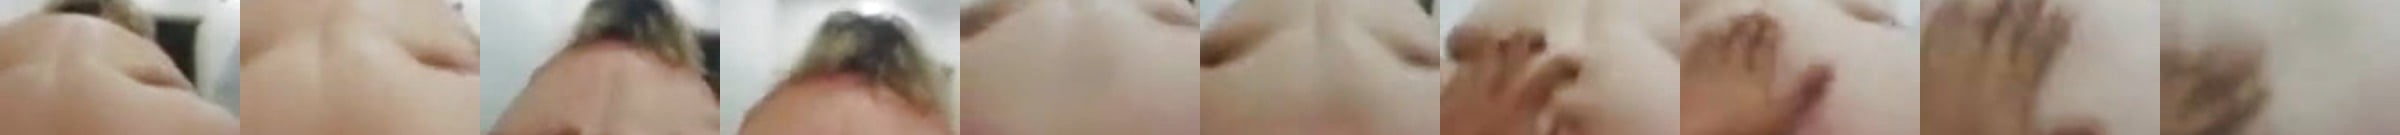 Vidéos Porno En Vedette Yenge Vidéos Porno Xhamster